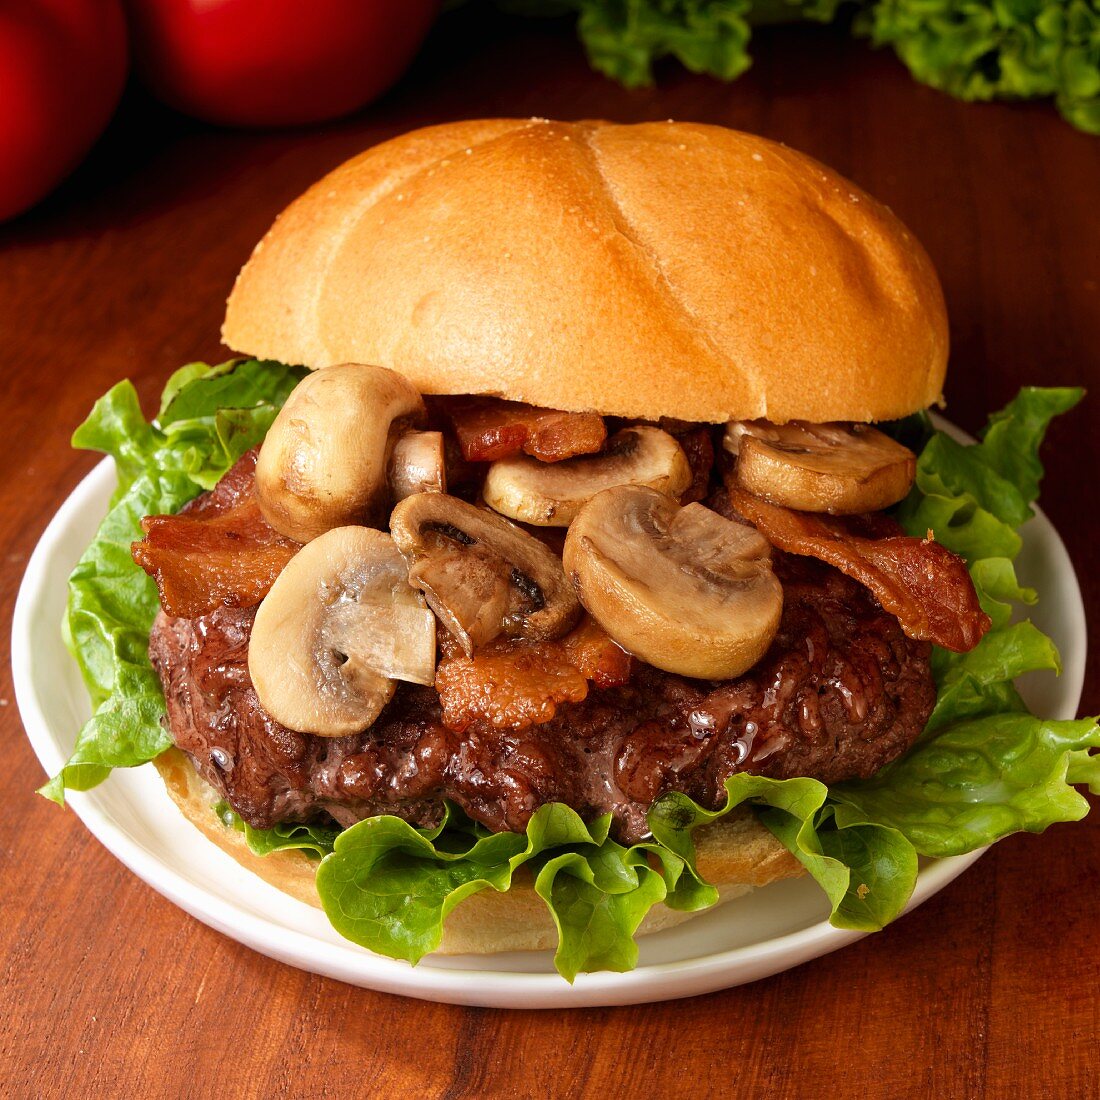 Hamburger with mushrooms, bacon, lettuce